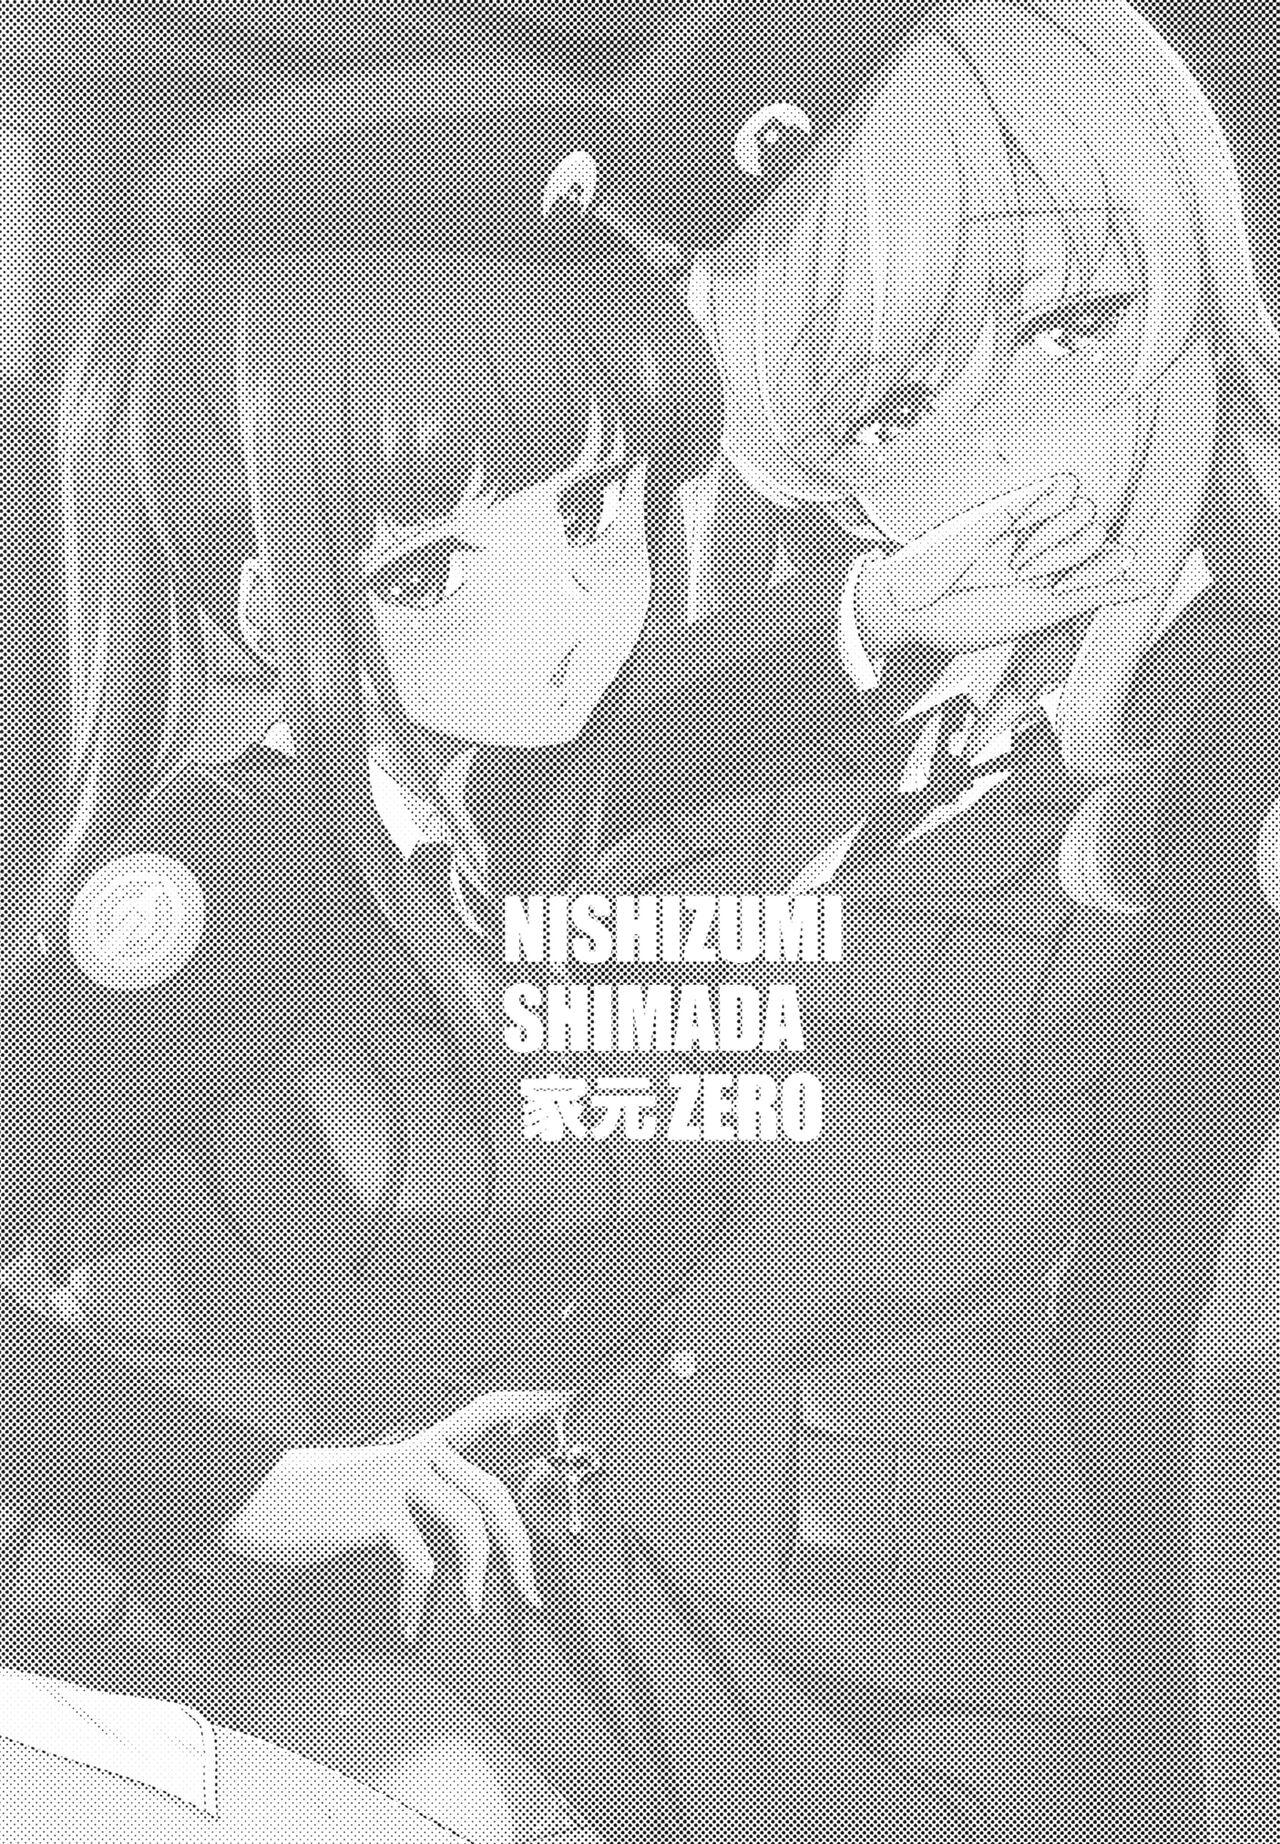 Twink NISHIZUMI SHIMADA Iemoto ZERO - Girls und panzer Gay Interracial - Picture 2